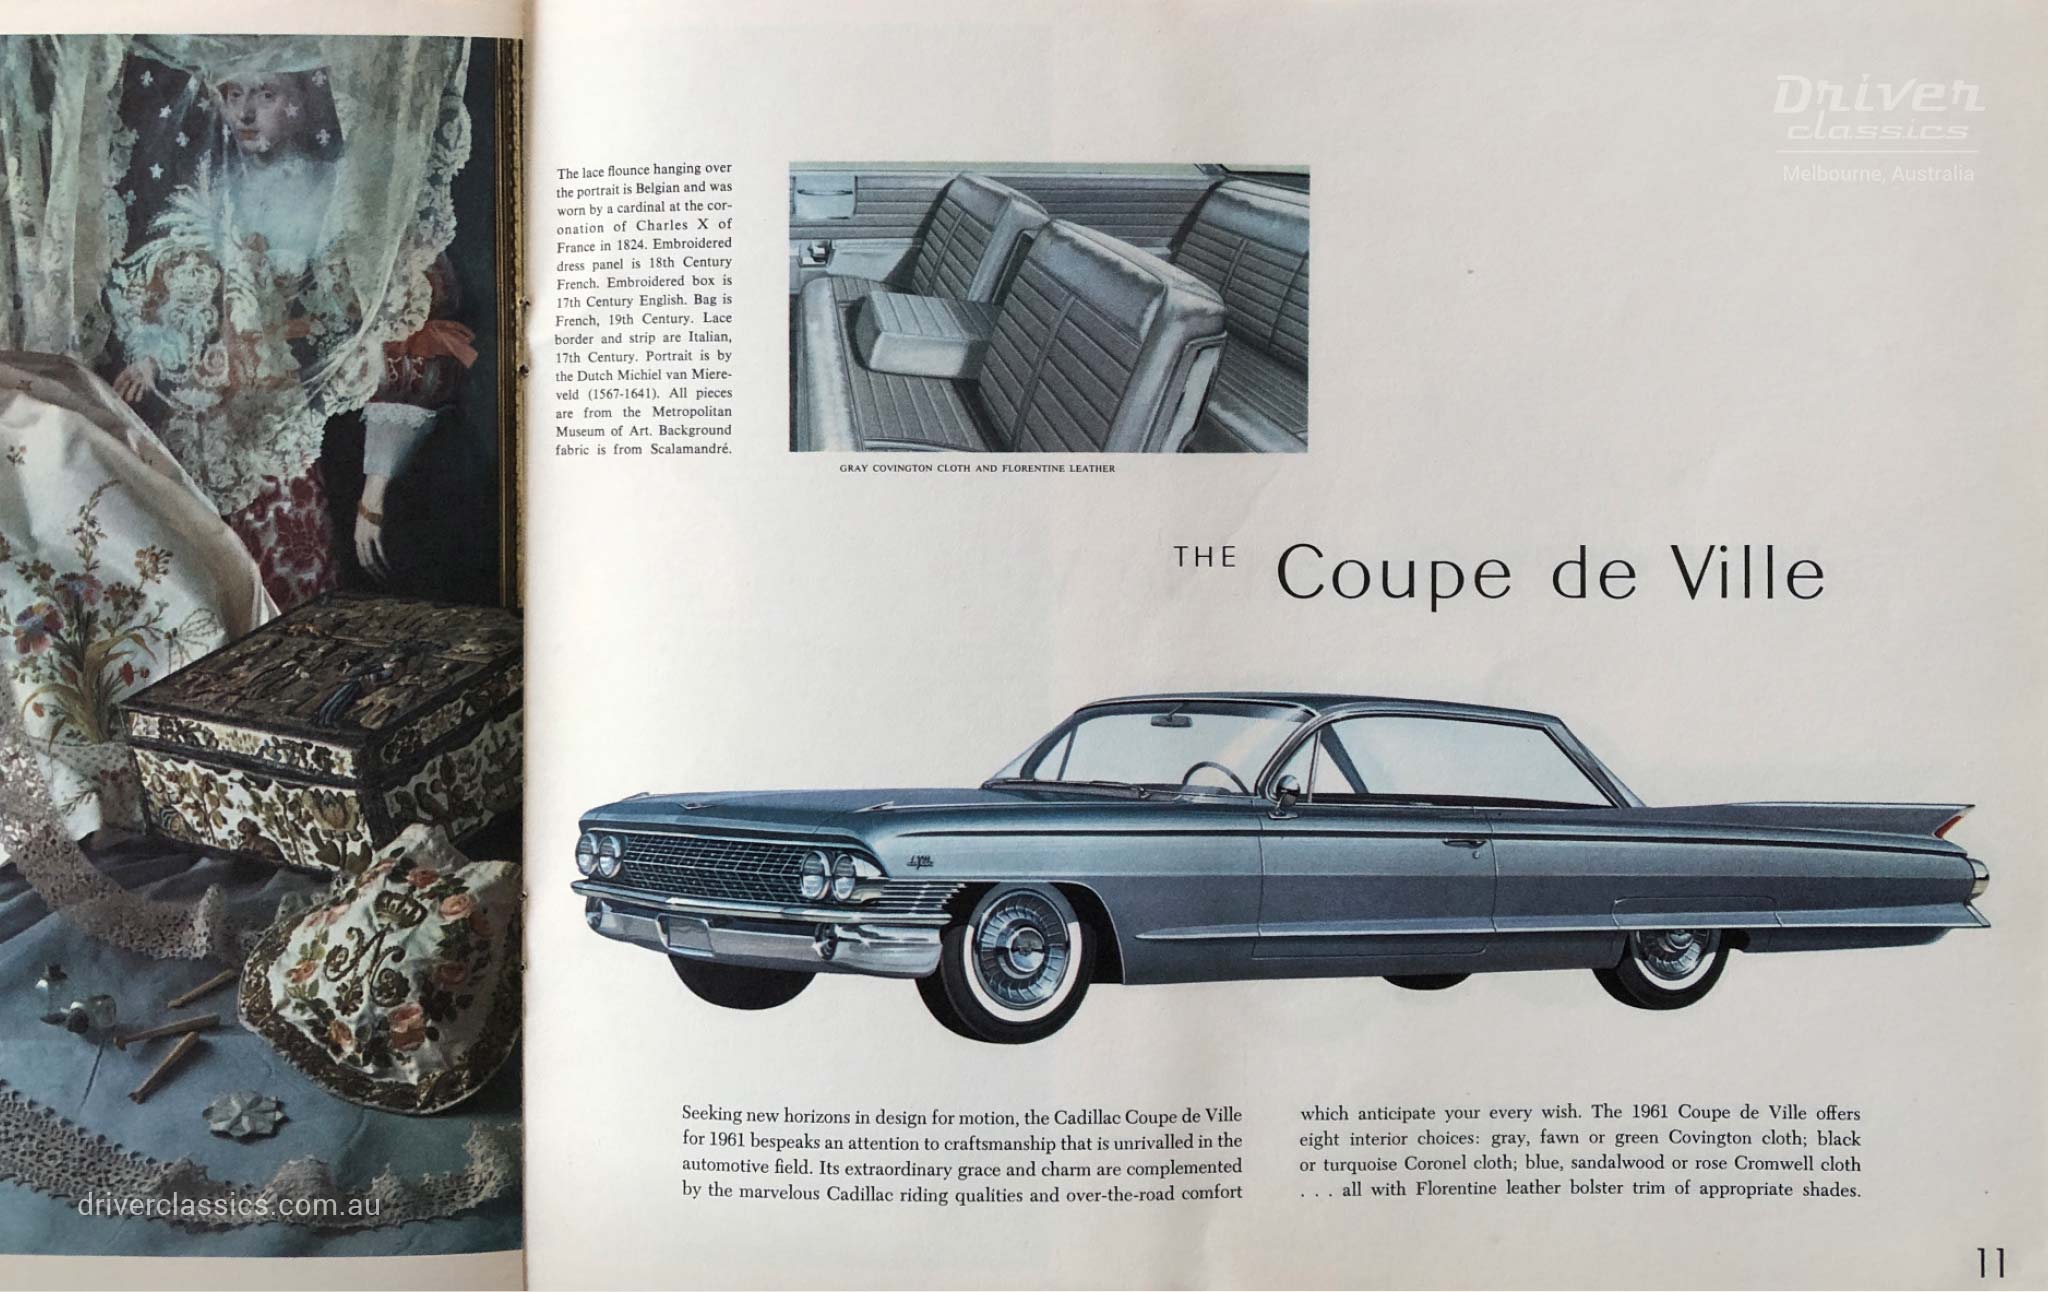 Cadillac Coupe de Ville (1961 version) brochure